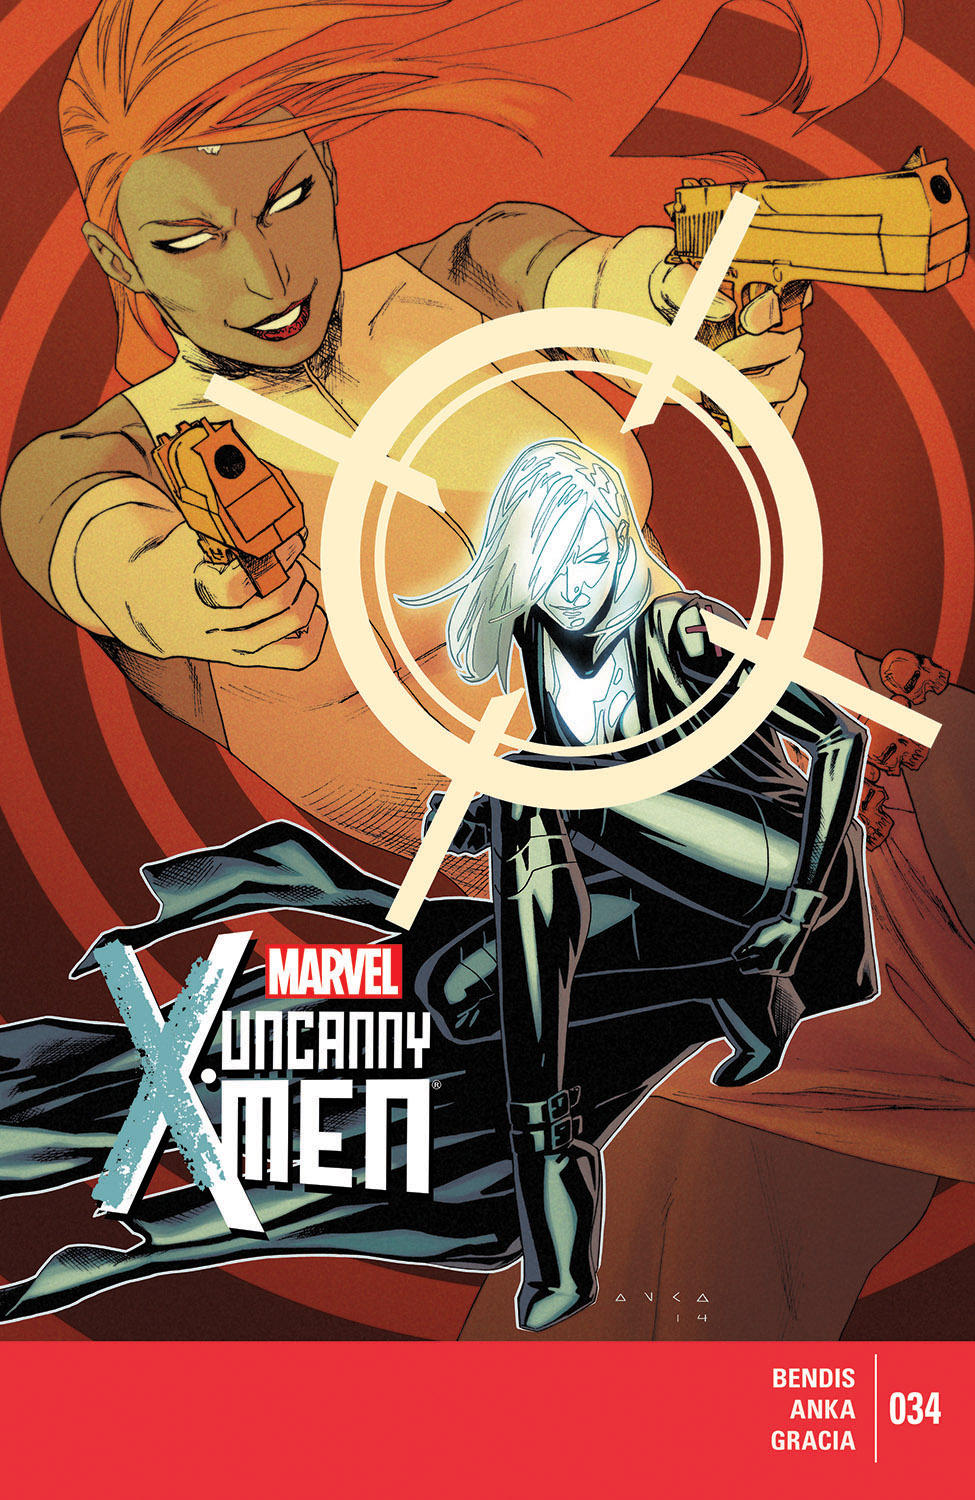 Uncanny X-Men (2013) #34